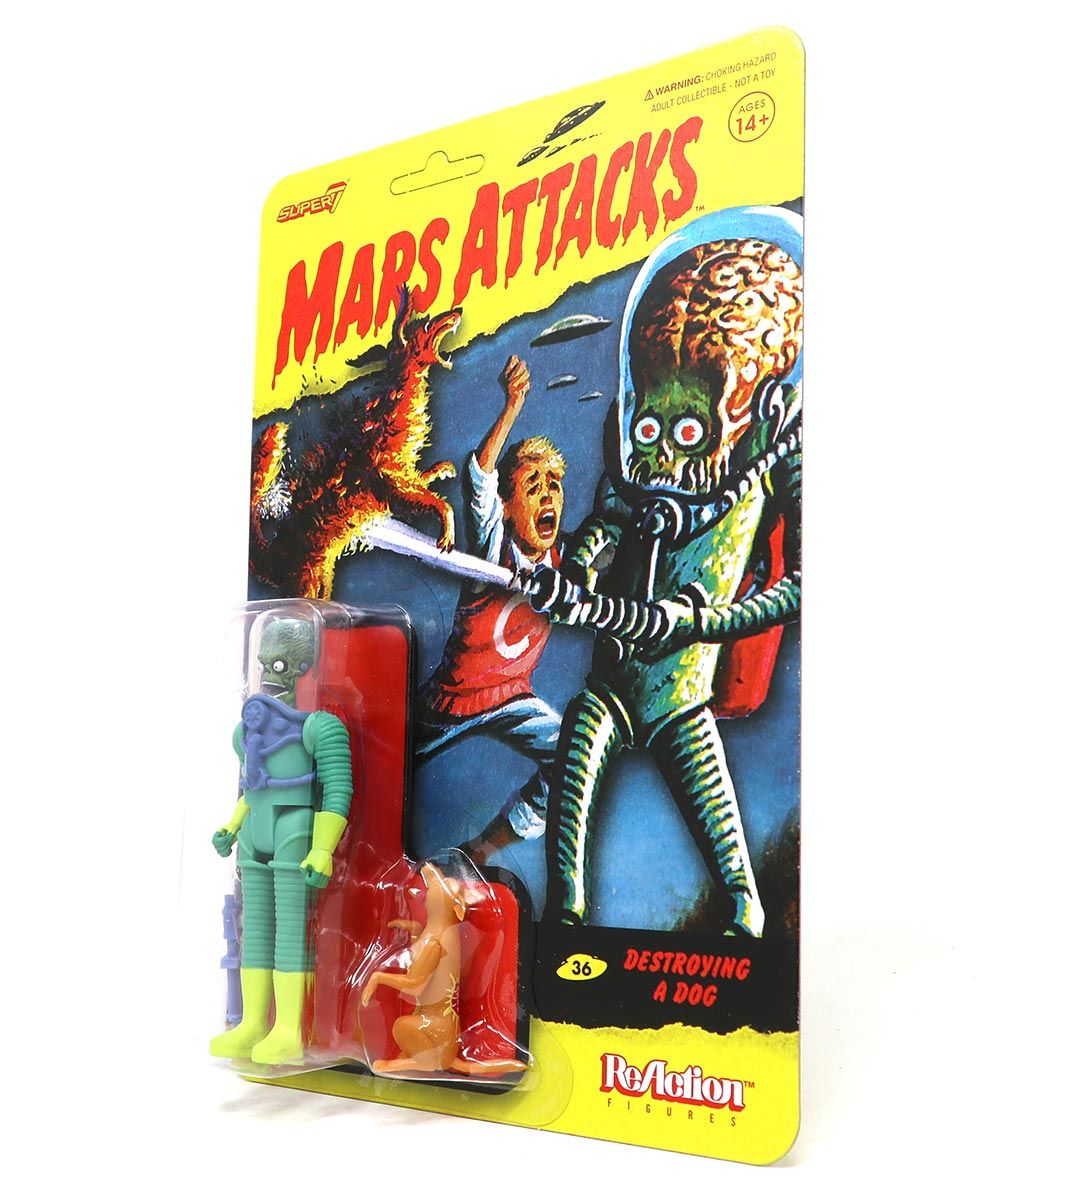 Destroying a dog - Mars Attacks - ReAction figure